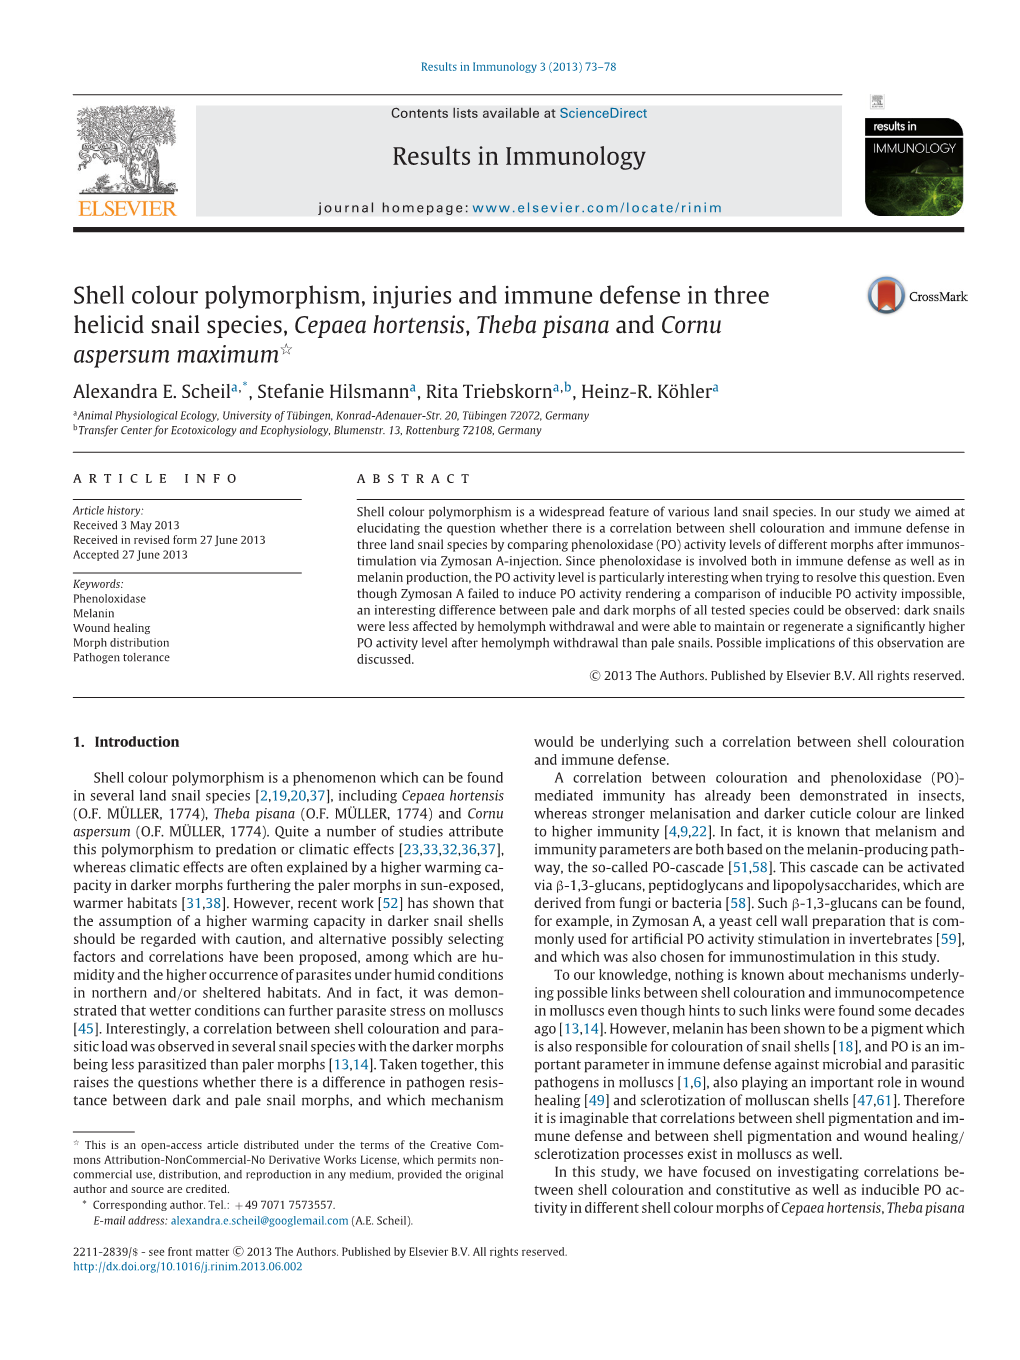 Shell Colour Polymorphism, Injuries and Immune Defense in Three Helicid Snail Species, Cepaea Hortensis , Theba Pisana and Cornu ଝ Aspersum Maximum